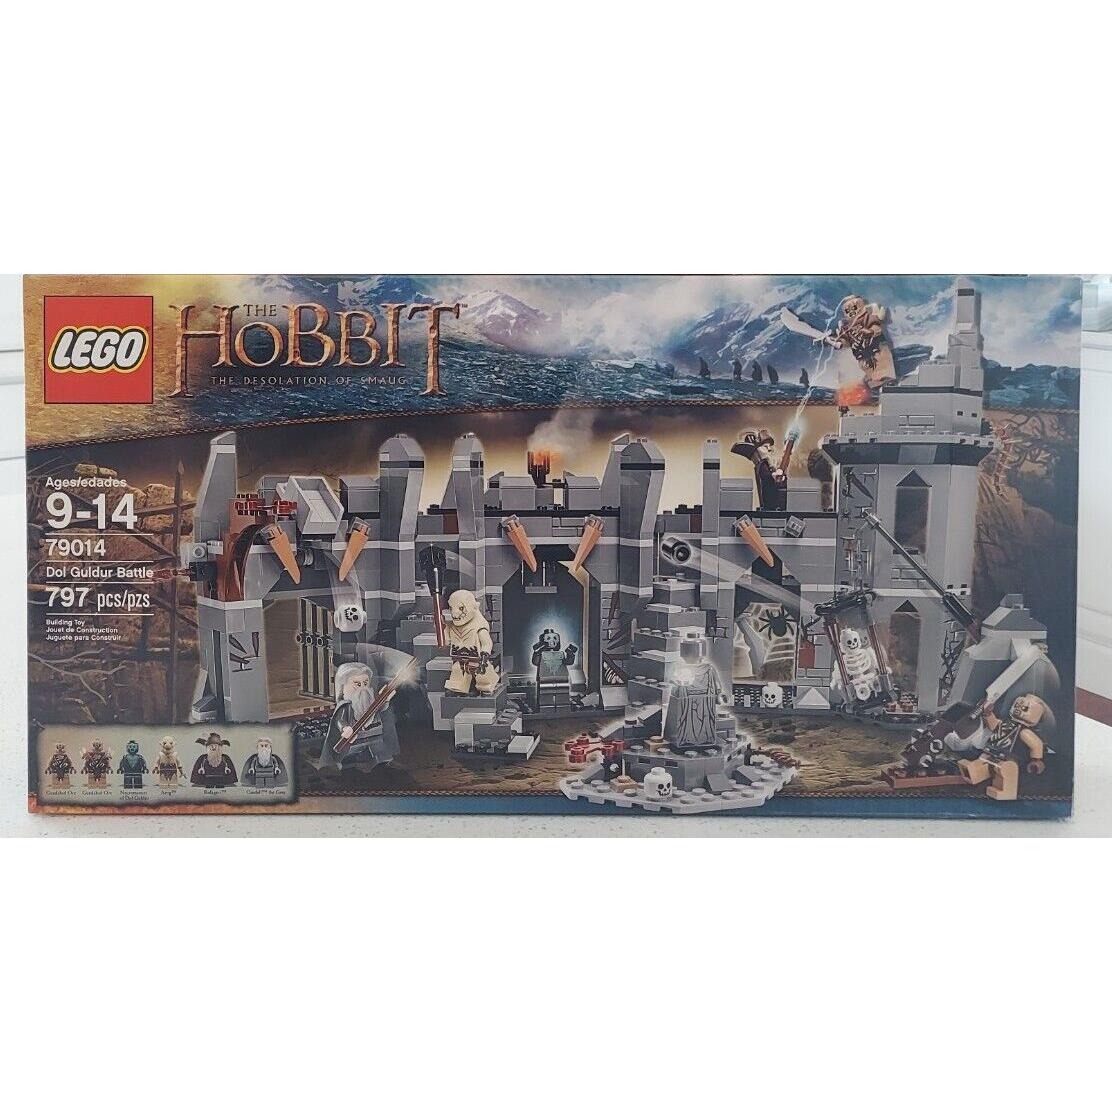 Lego The Hobbit: Dol Guldur Battle 79014 Radagast Necromancer Orc Gandalf